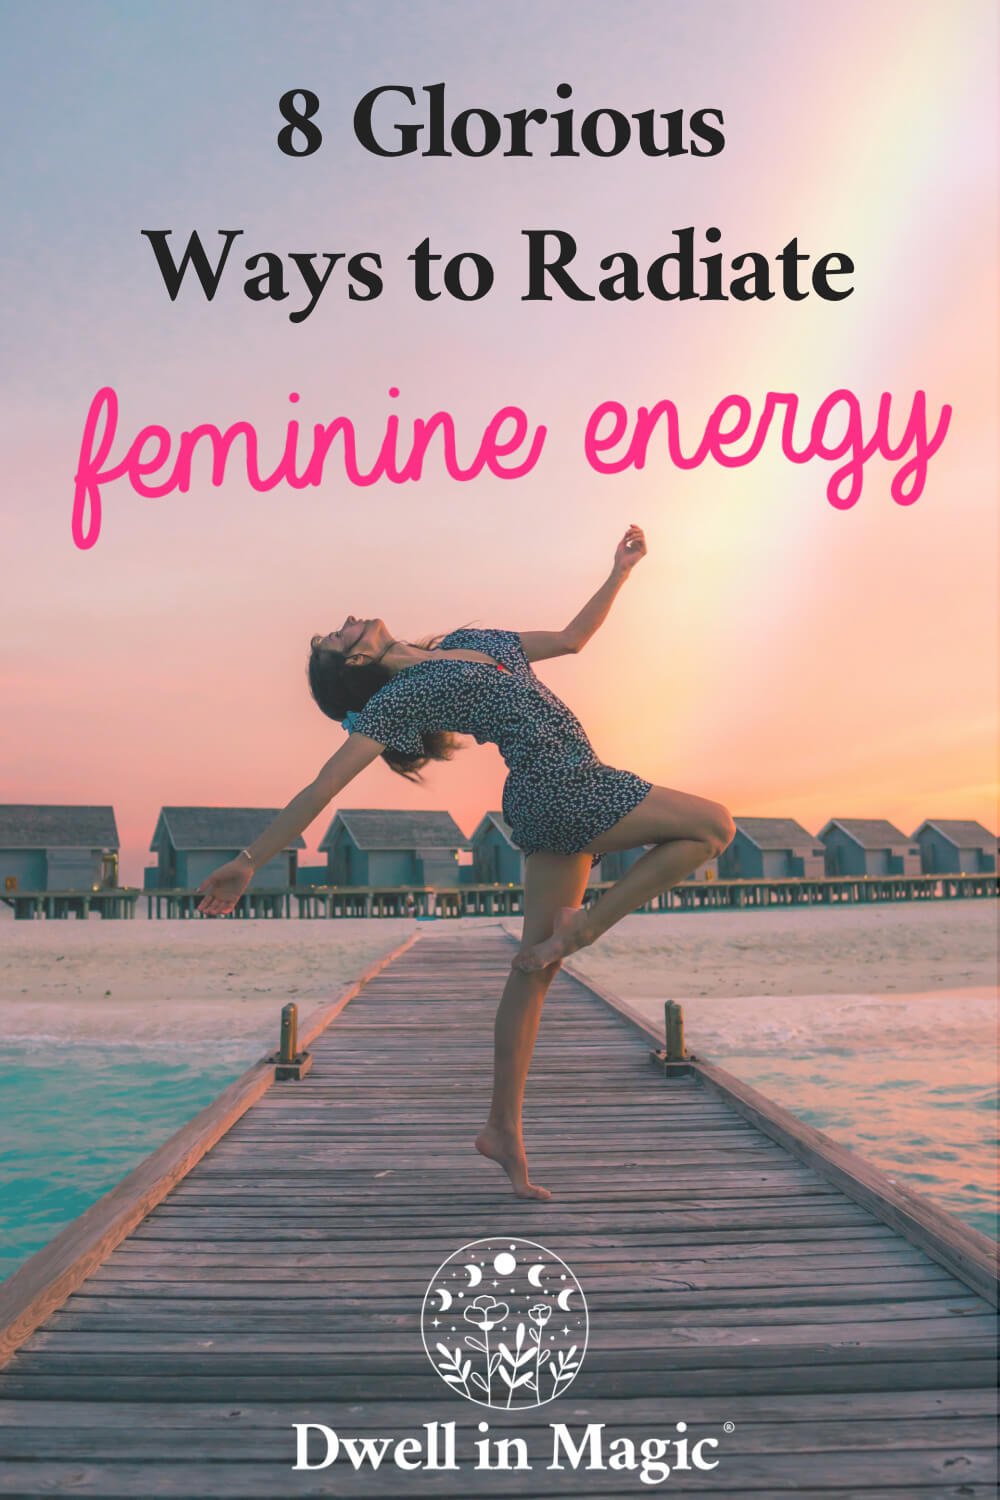 8 Glorious Ways to Radiate Feminine Energy